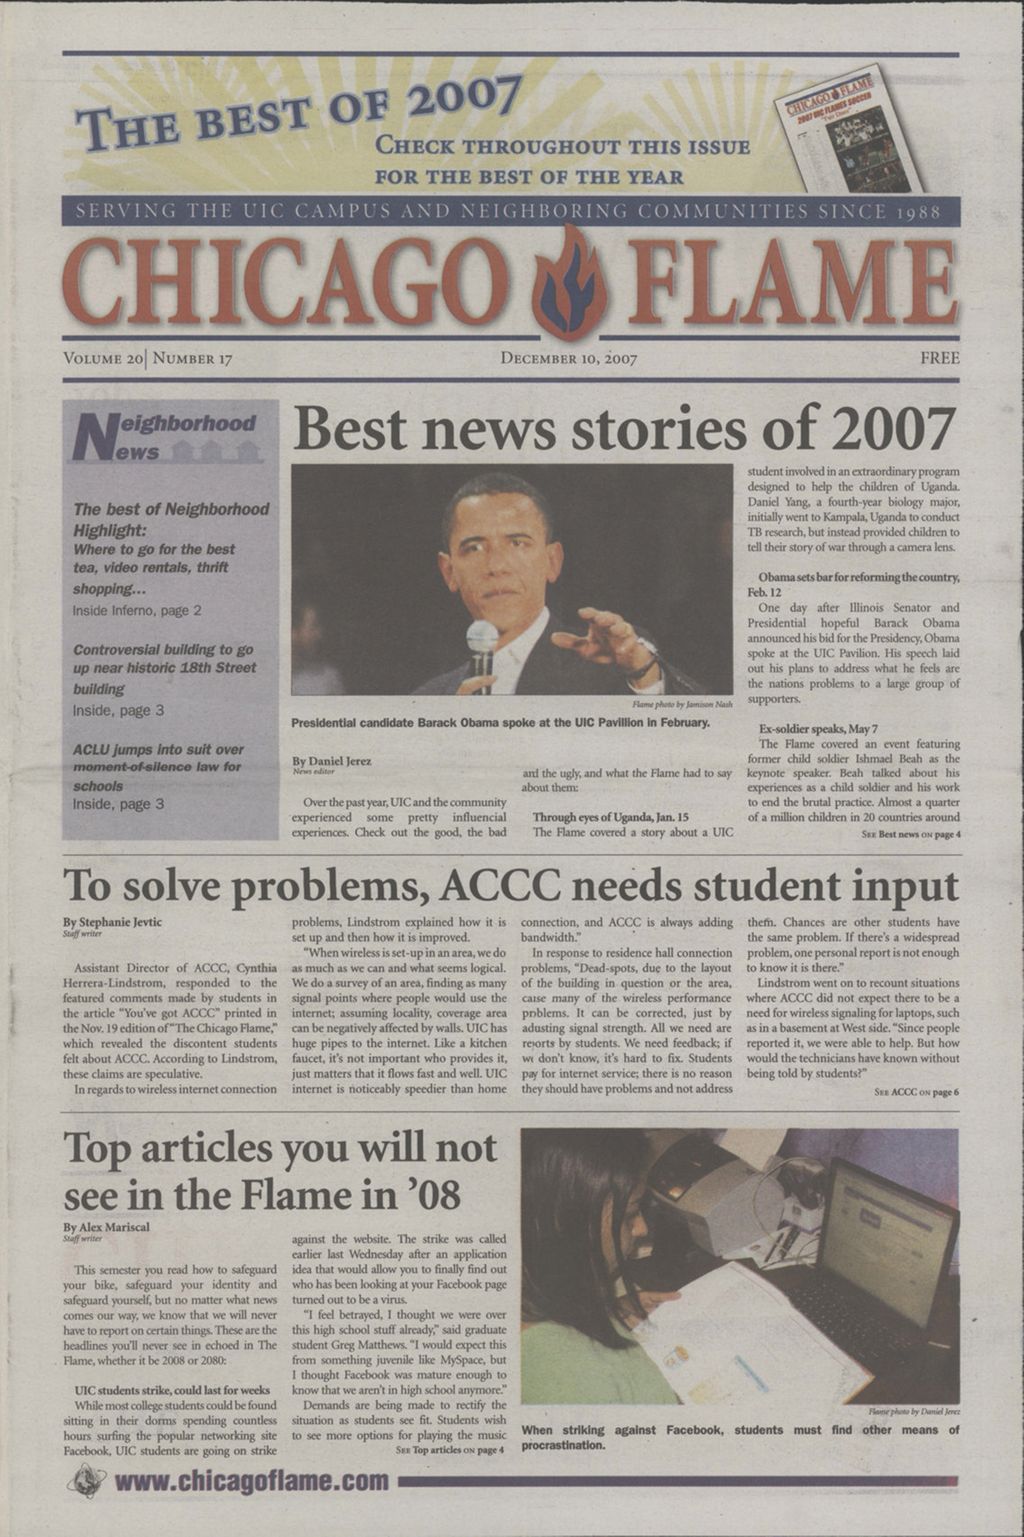 Chicago Flame (December 10, 2007)